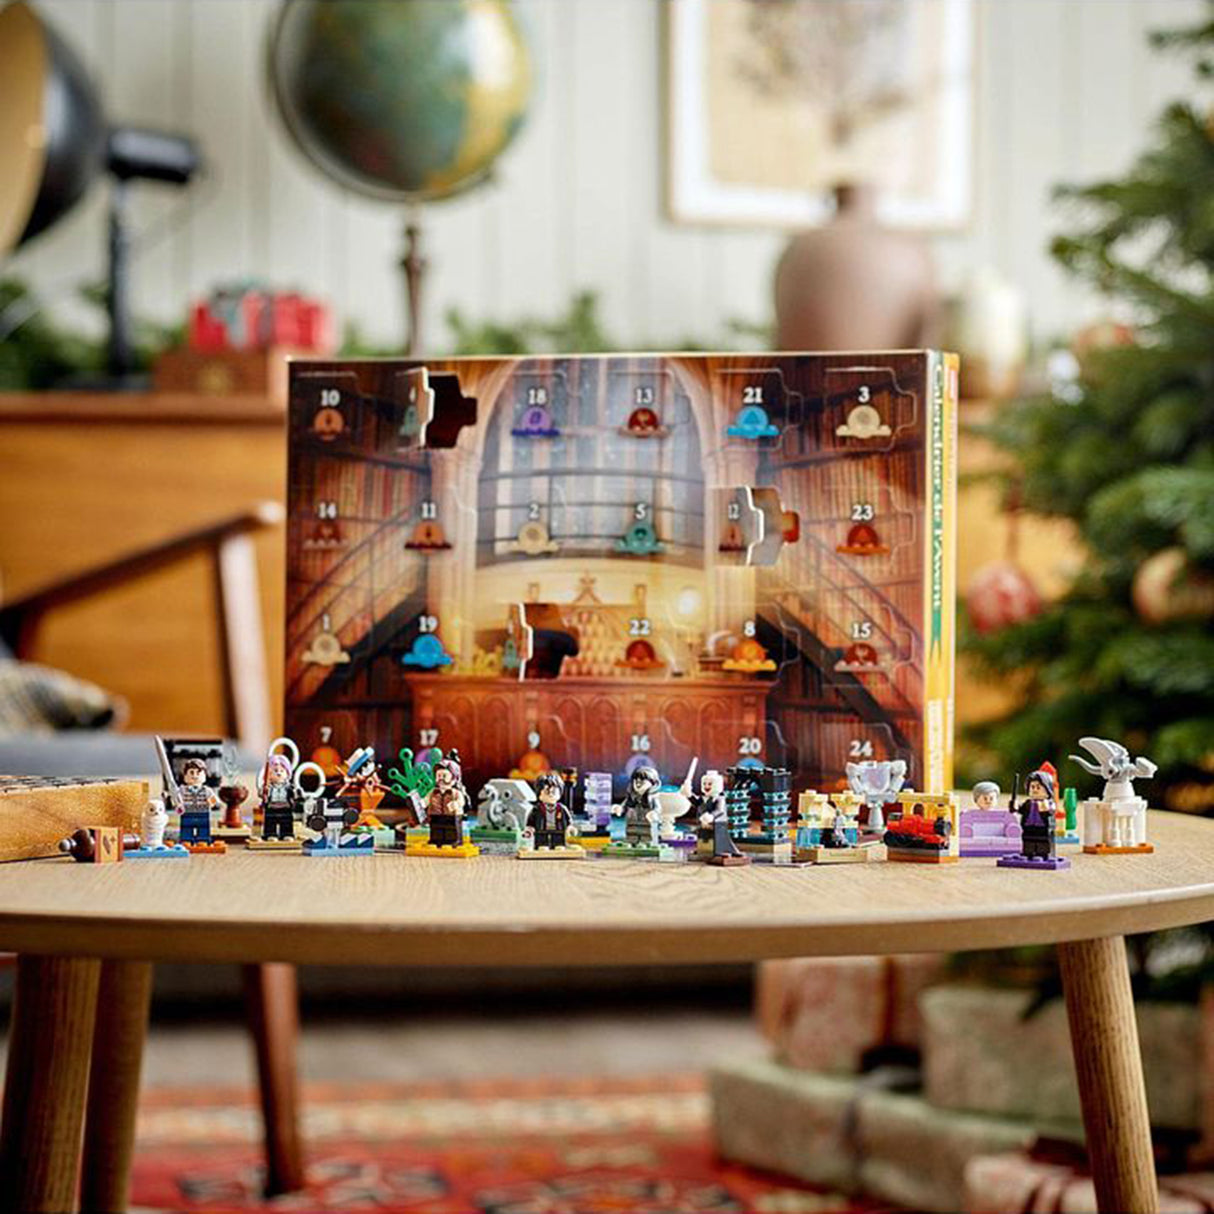 LEGO Harry Potter Advent Calendar 76404 Building Toy Set (334 pieces)